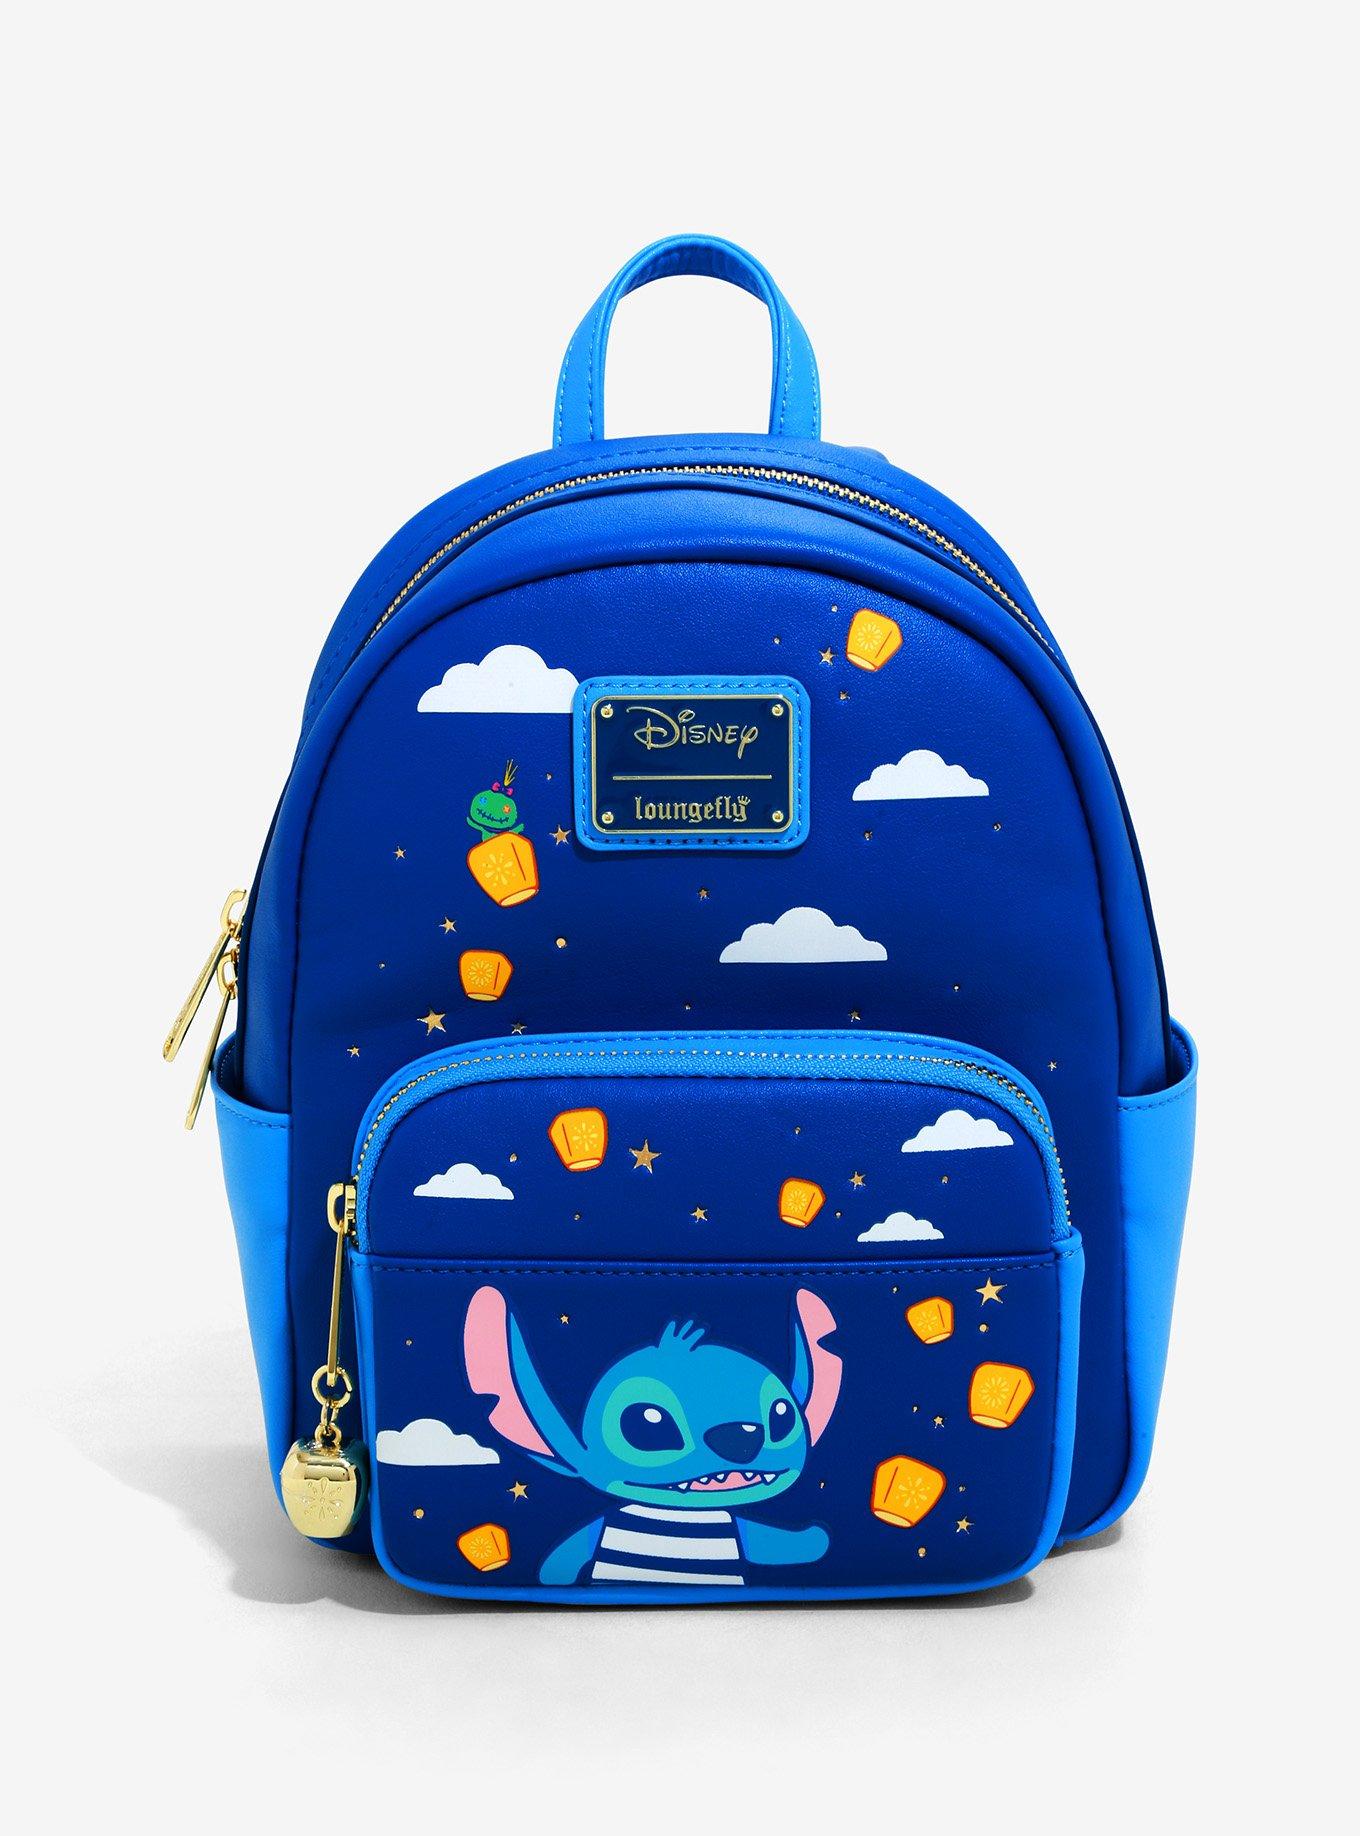 Disney Lilo & Stitch Figural Stitch Backpack - BoxLunch Exclusive